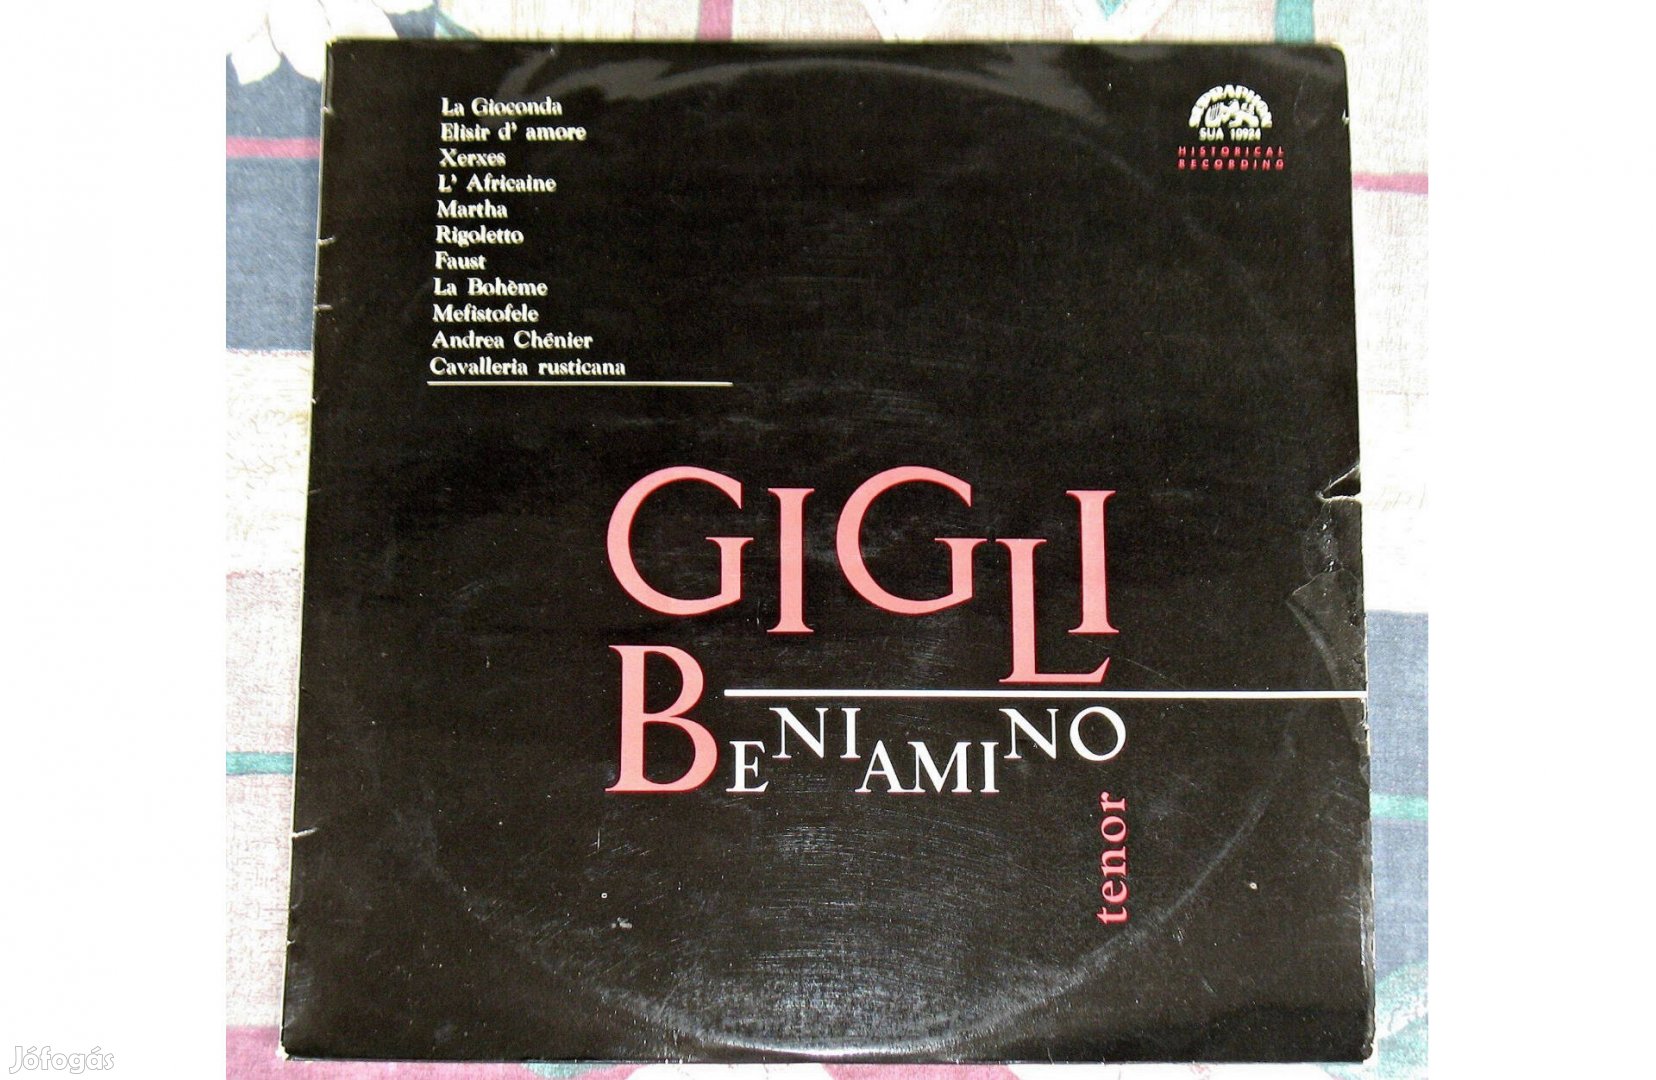 Beniamino Gigli opera dalválogatások bakelit lemezen